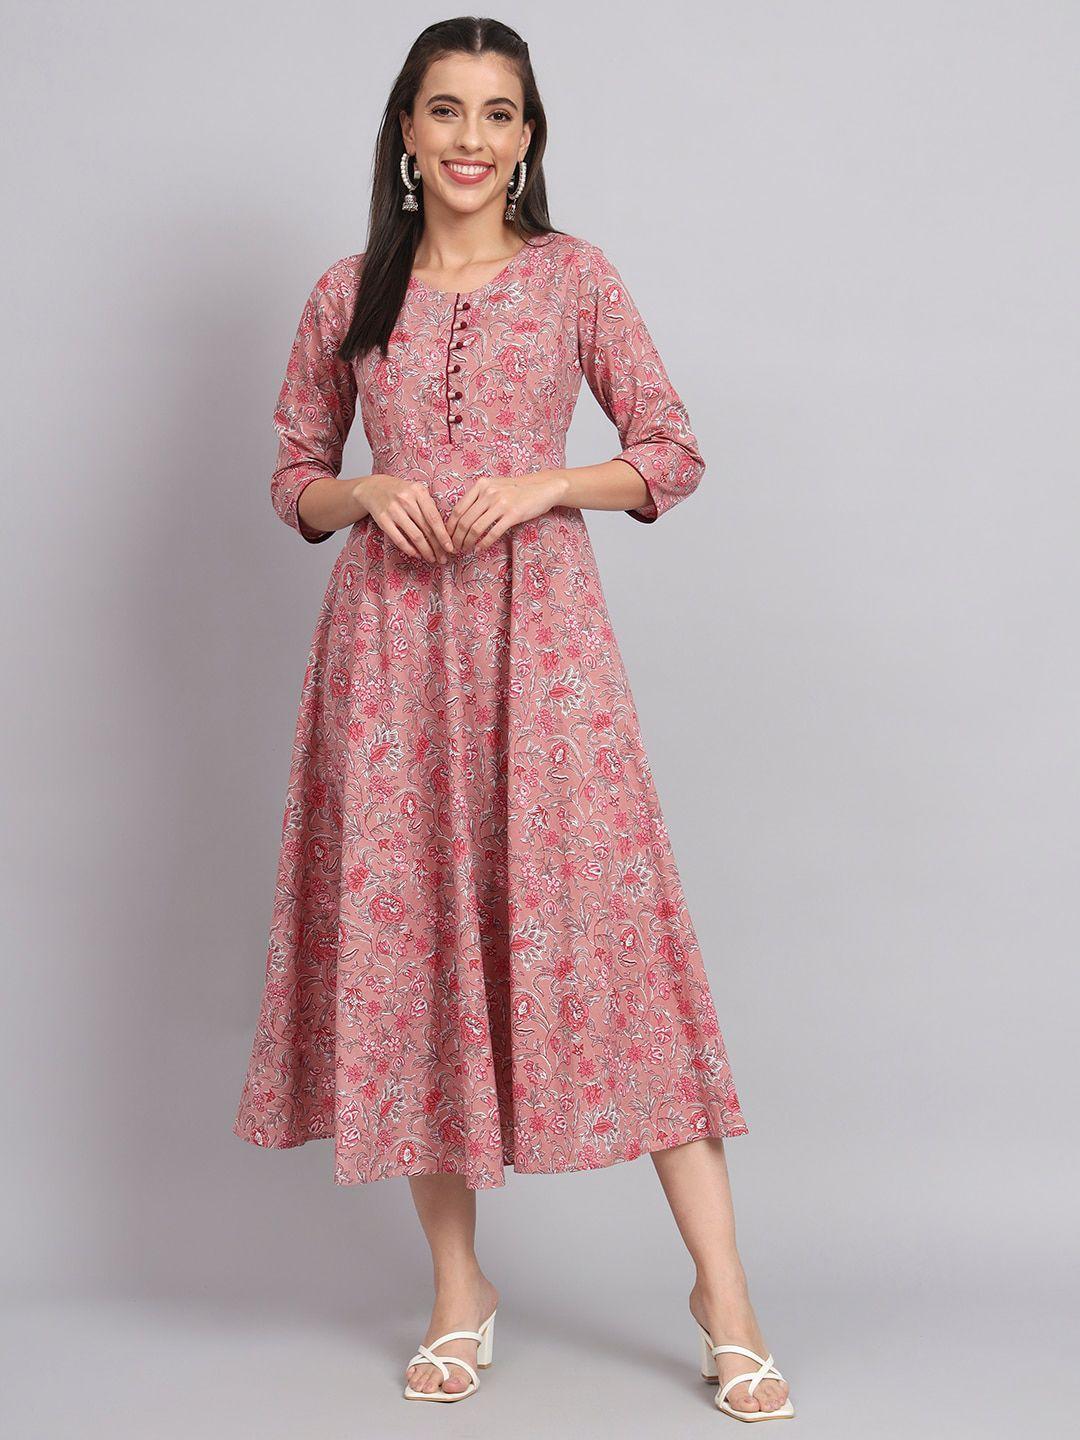 rangmayee-floral-printed-a-line-cotton-ethnic-dress